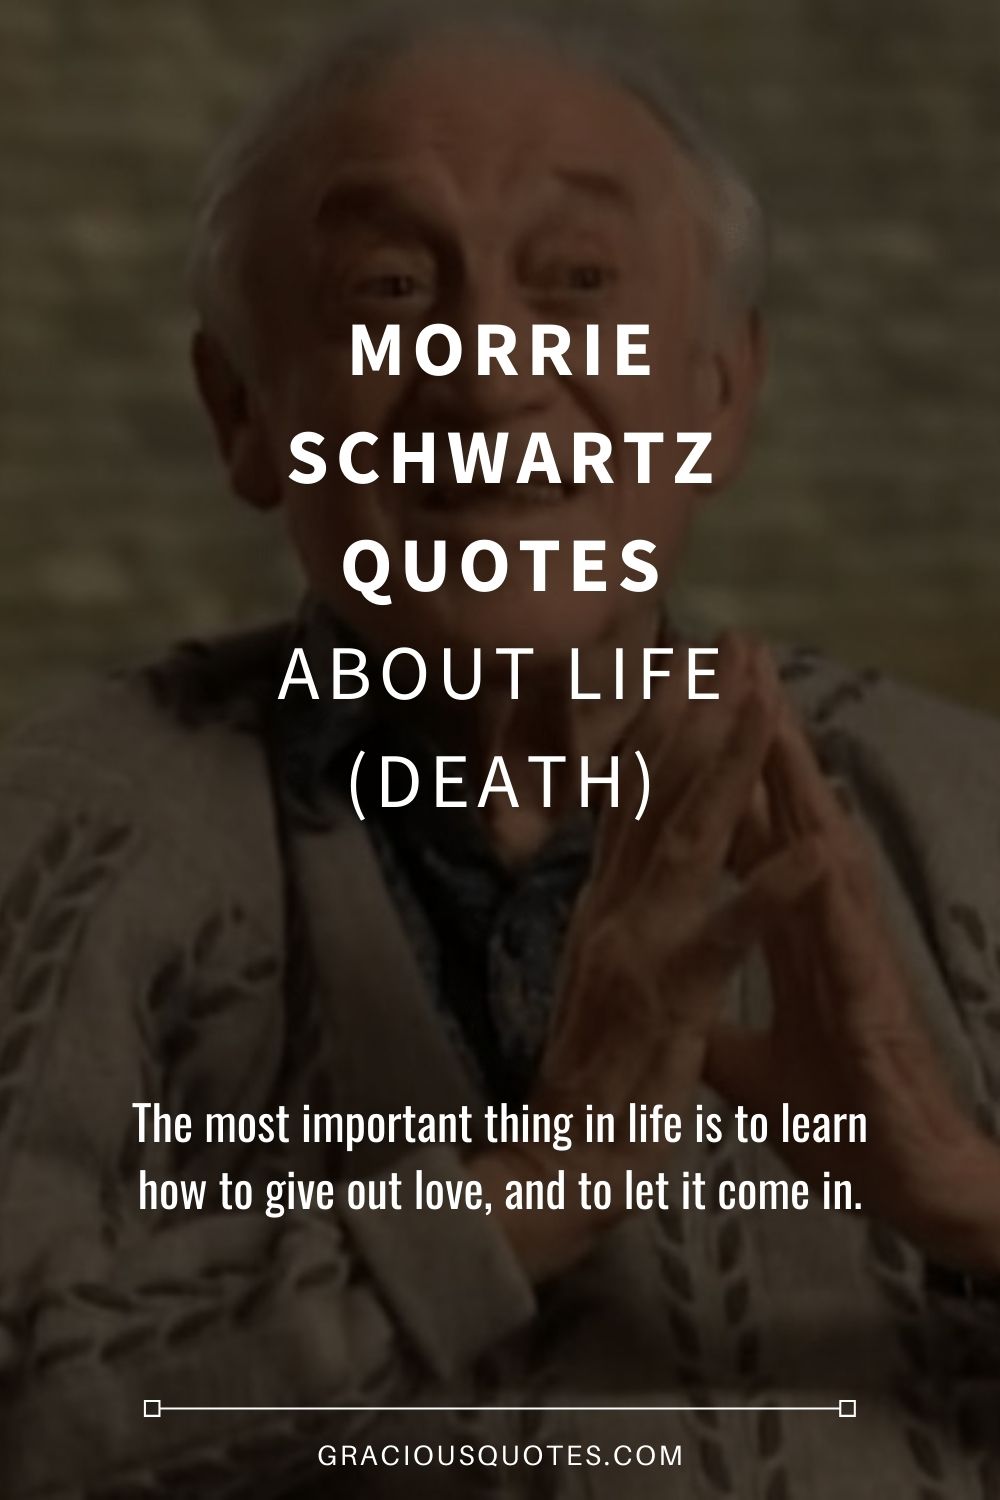 Morrie Schwartz Quotes About Life (DEATH) - Gracious Quotes